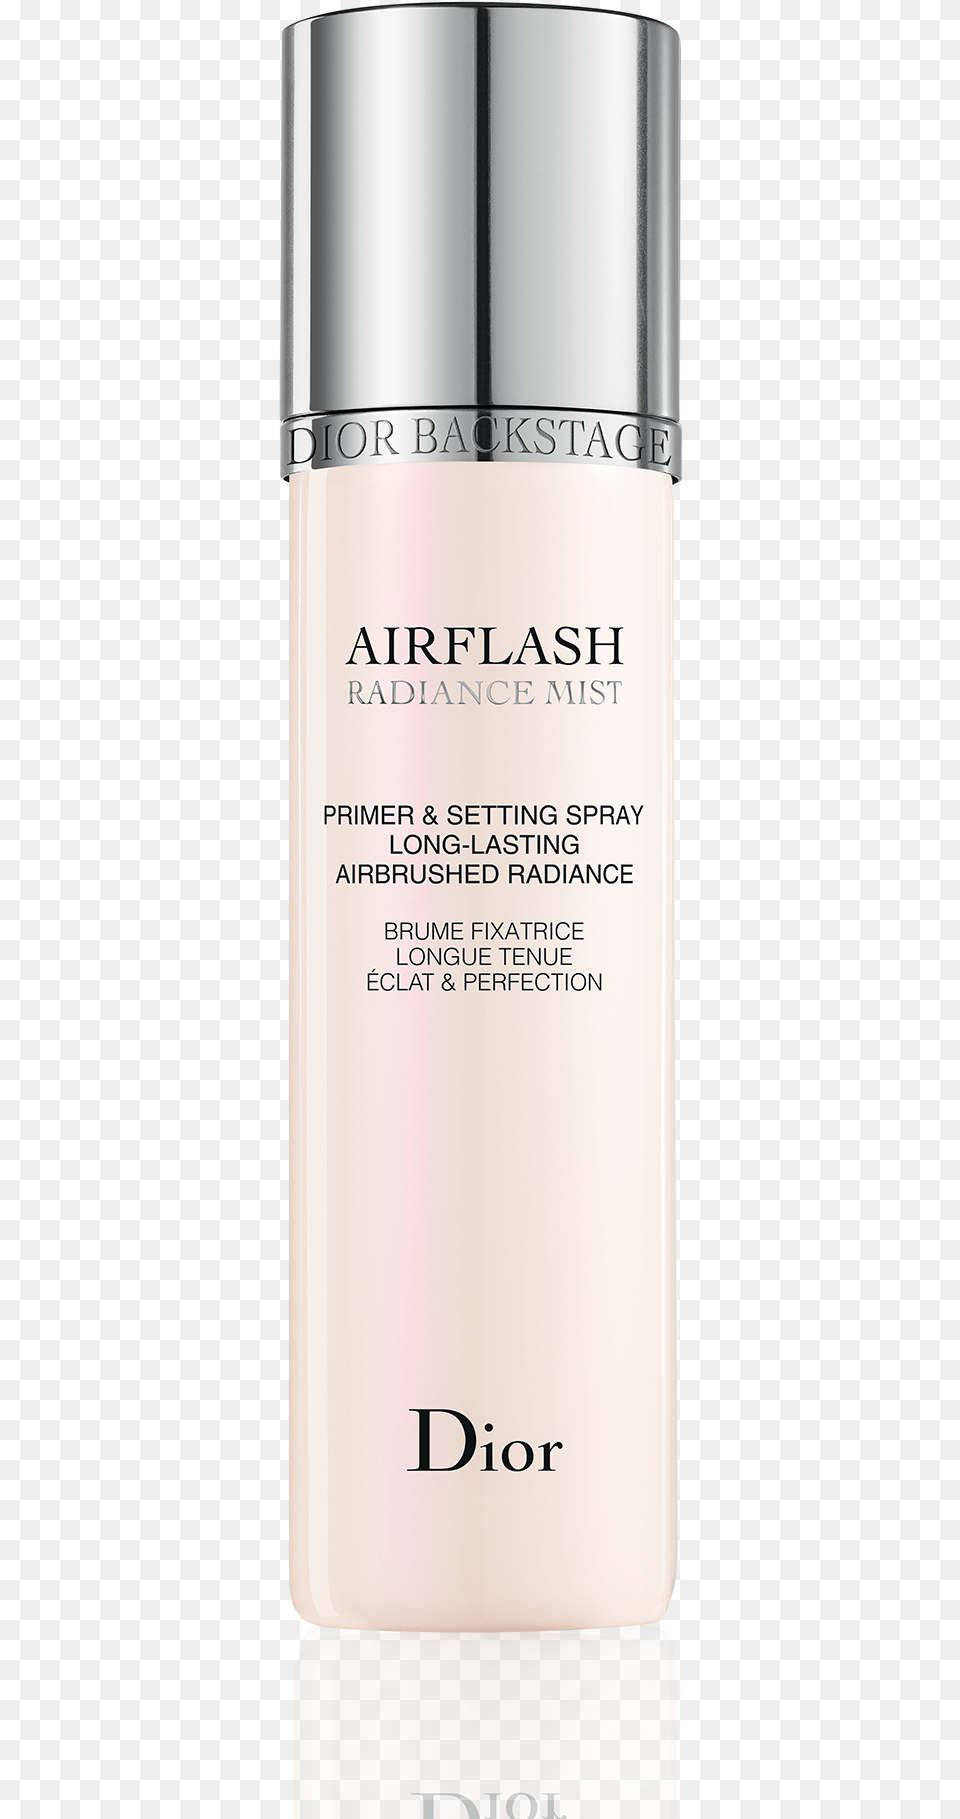 Dior Backstage Airflash Radiance Mist, Bottle, Cosmetics, Lotion Free Transparent Png